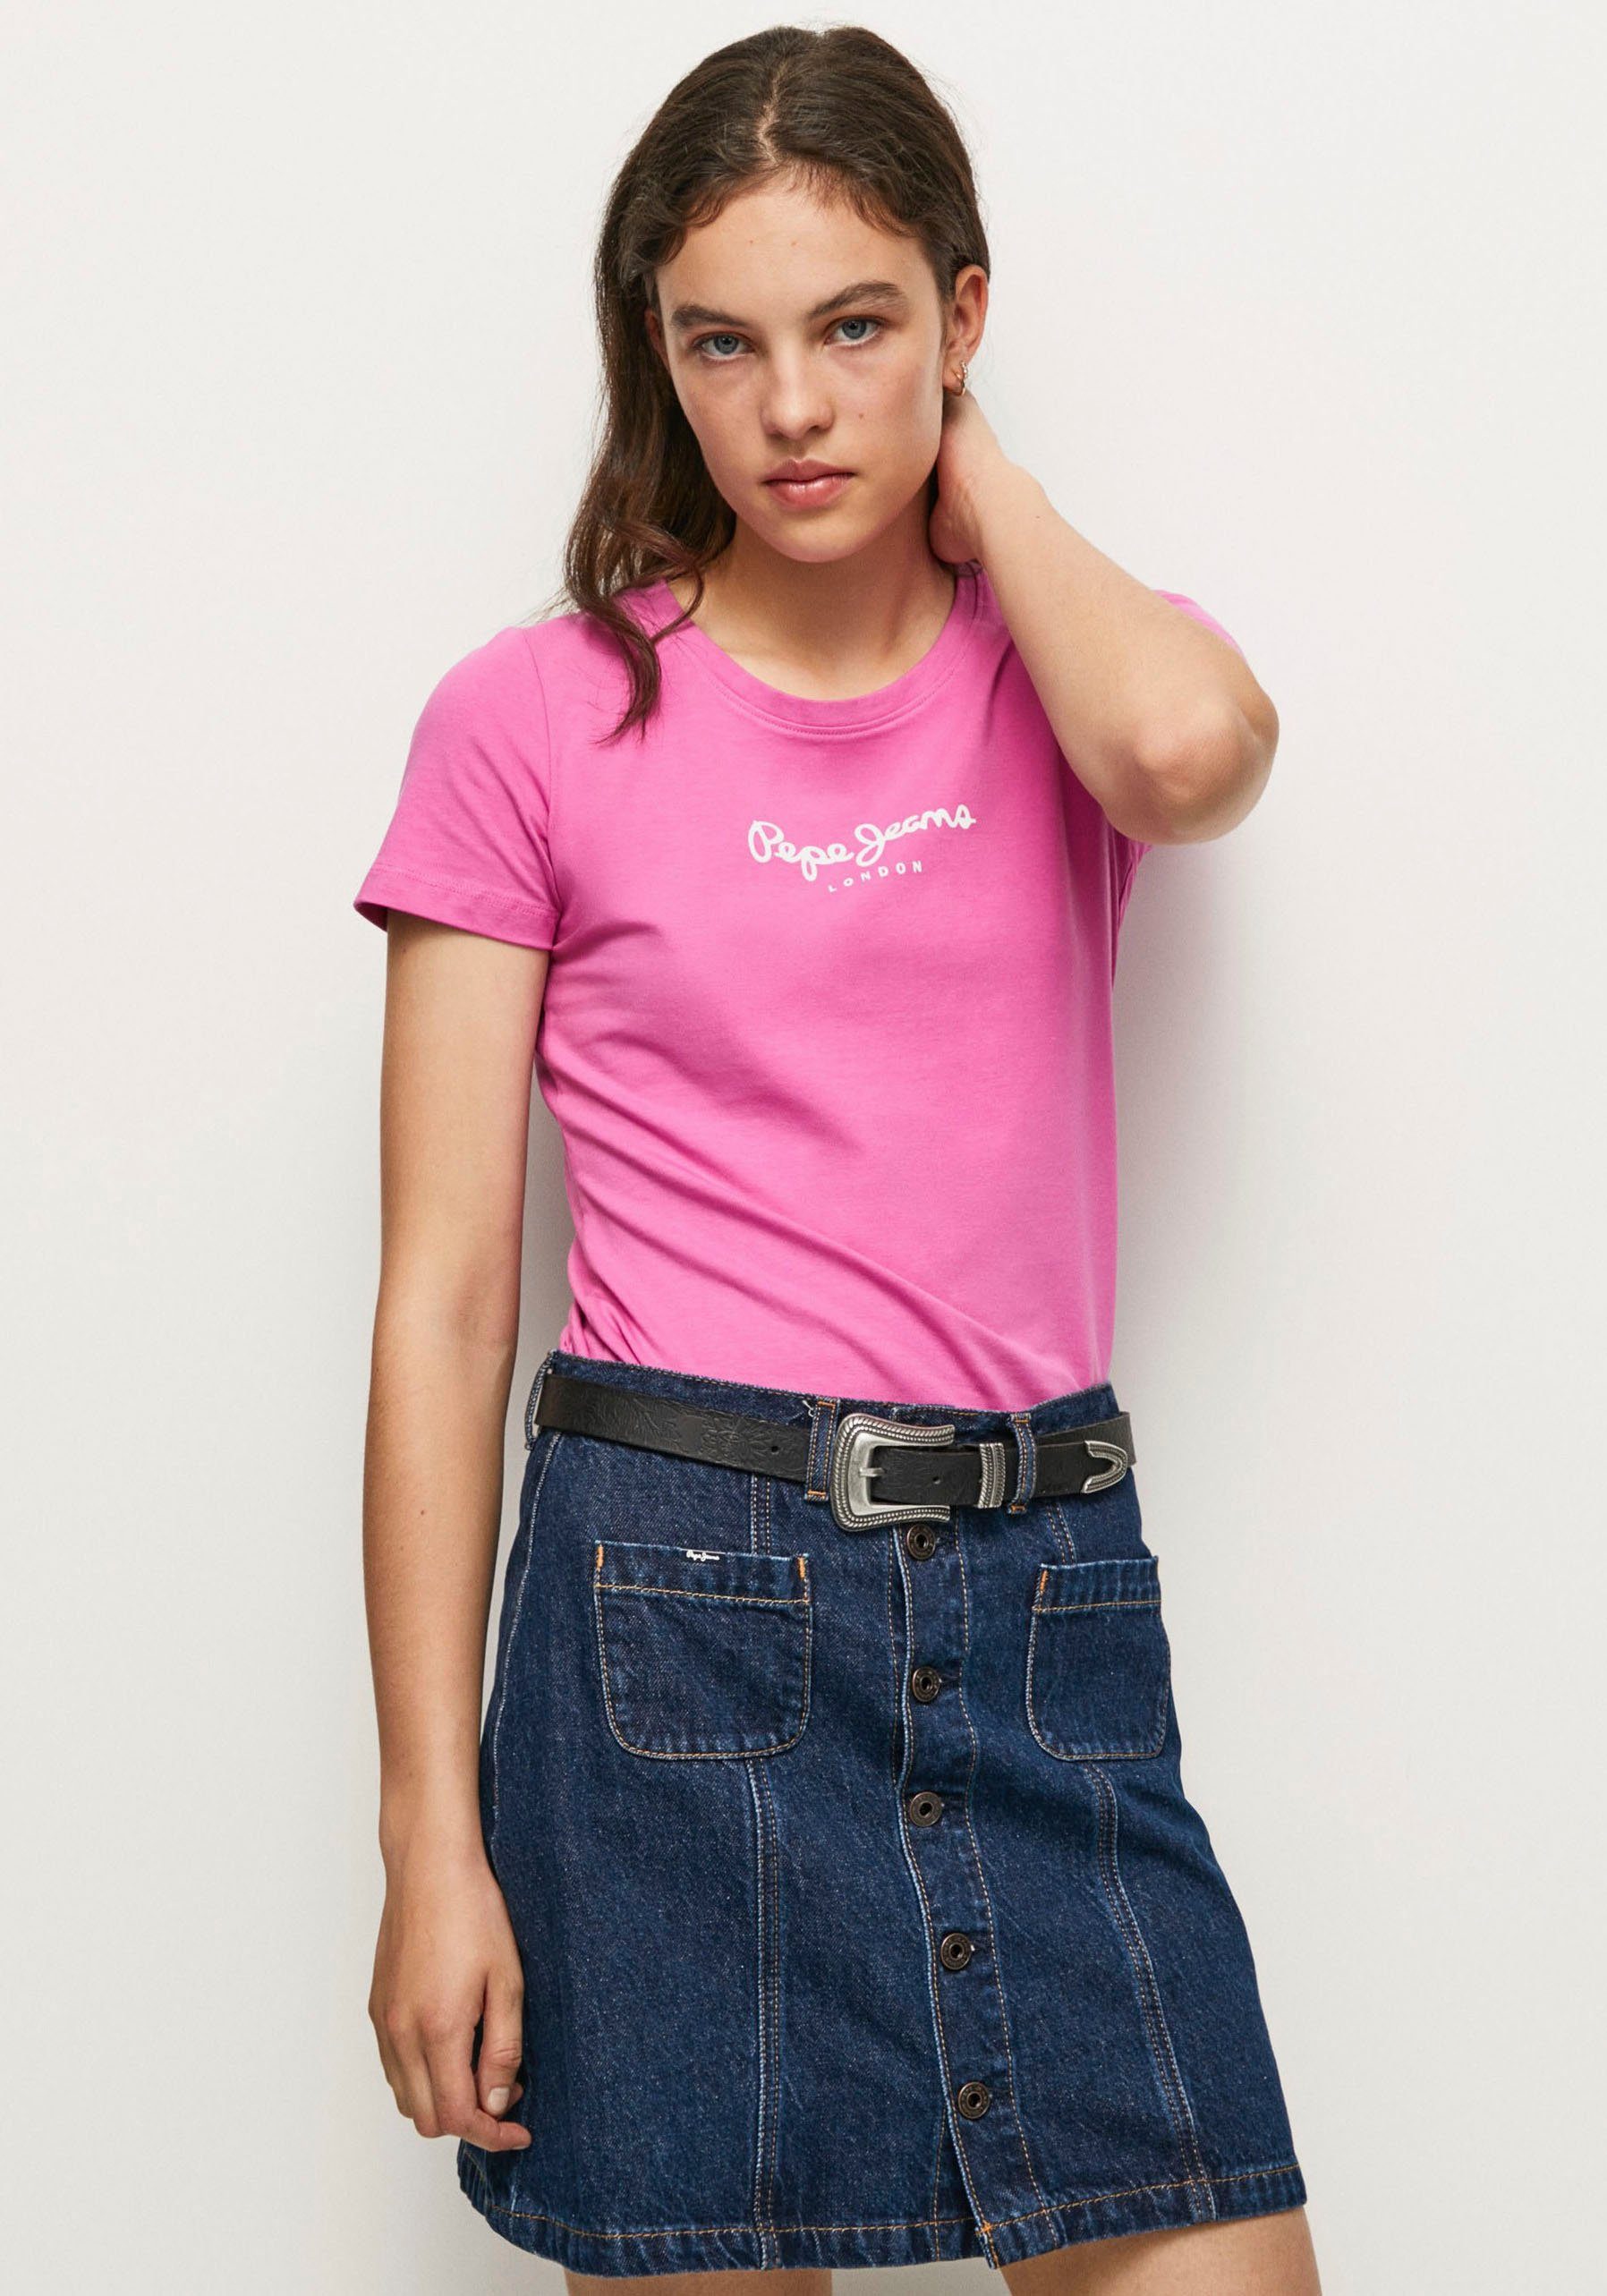 Pepe Jeans T-Shirt VIOLETTE in figurbetonter Passform und in schlichter unifarbener Optik 363ENGLISH ROSE | V-Shirts